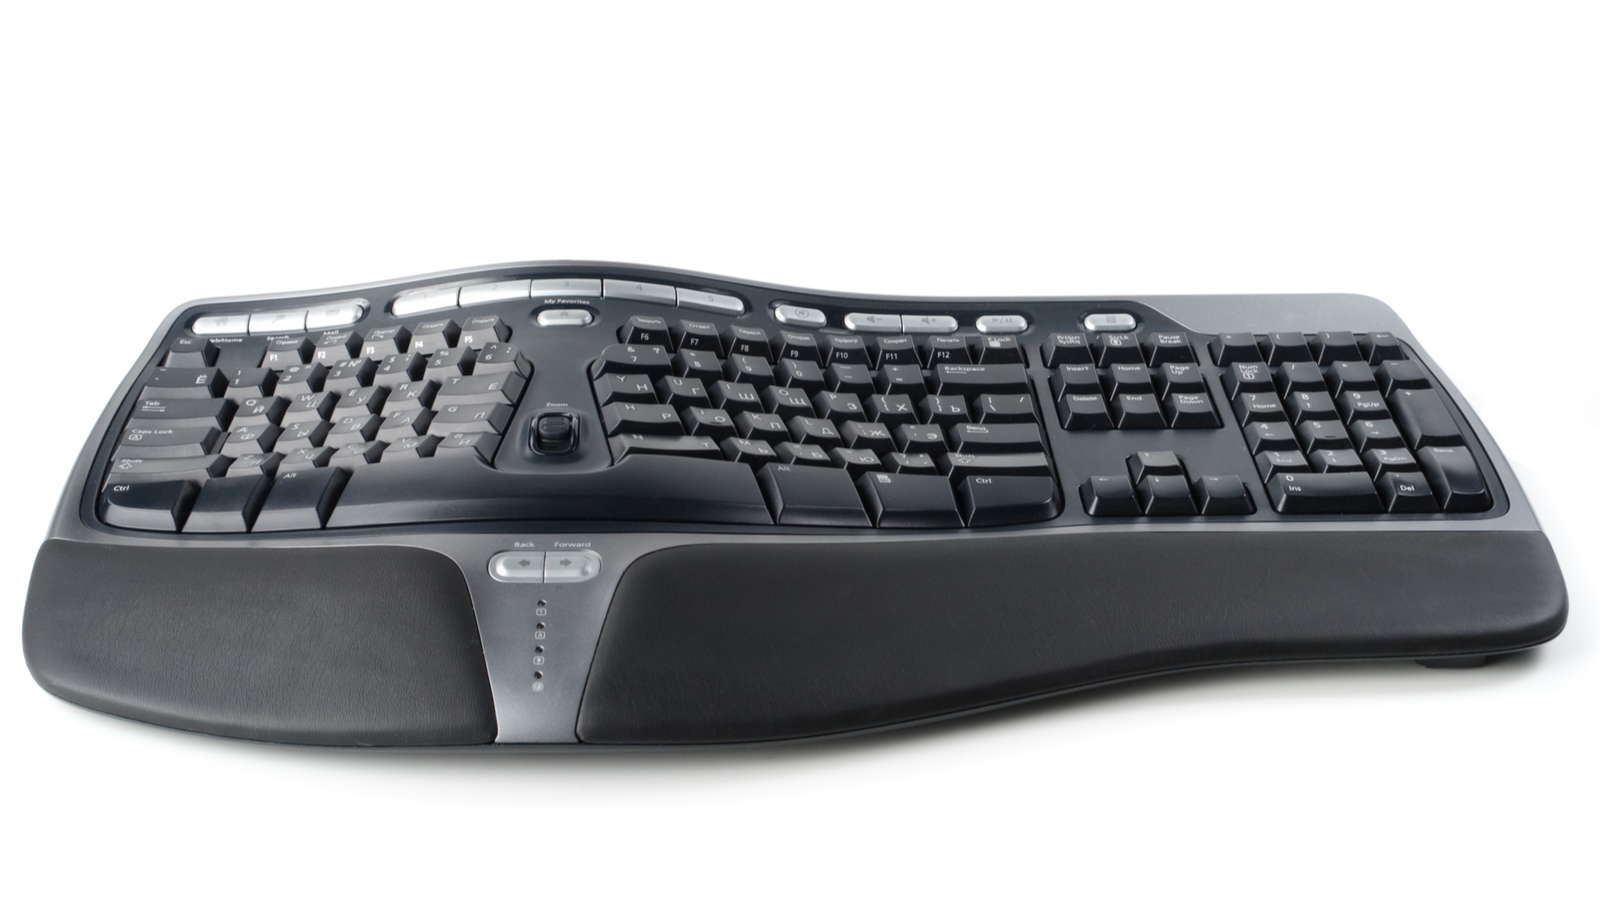 Modern black ergonomic computer keyboard against plain white background